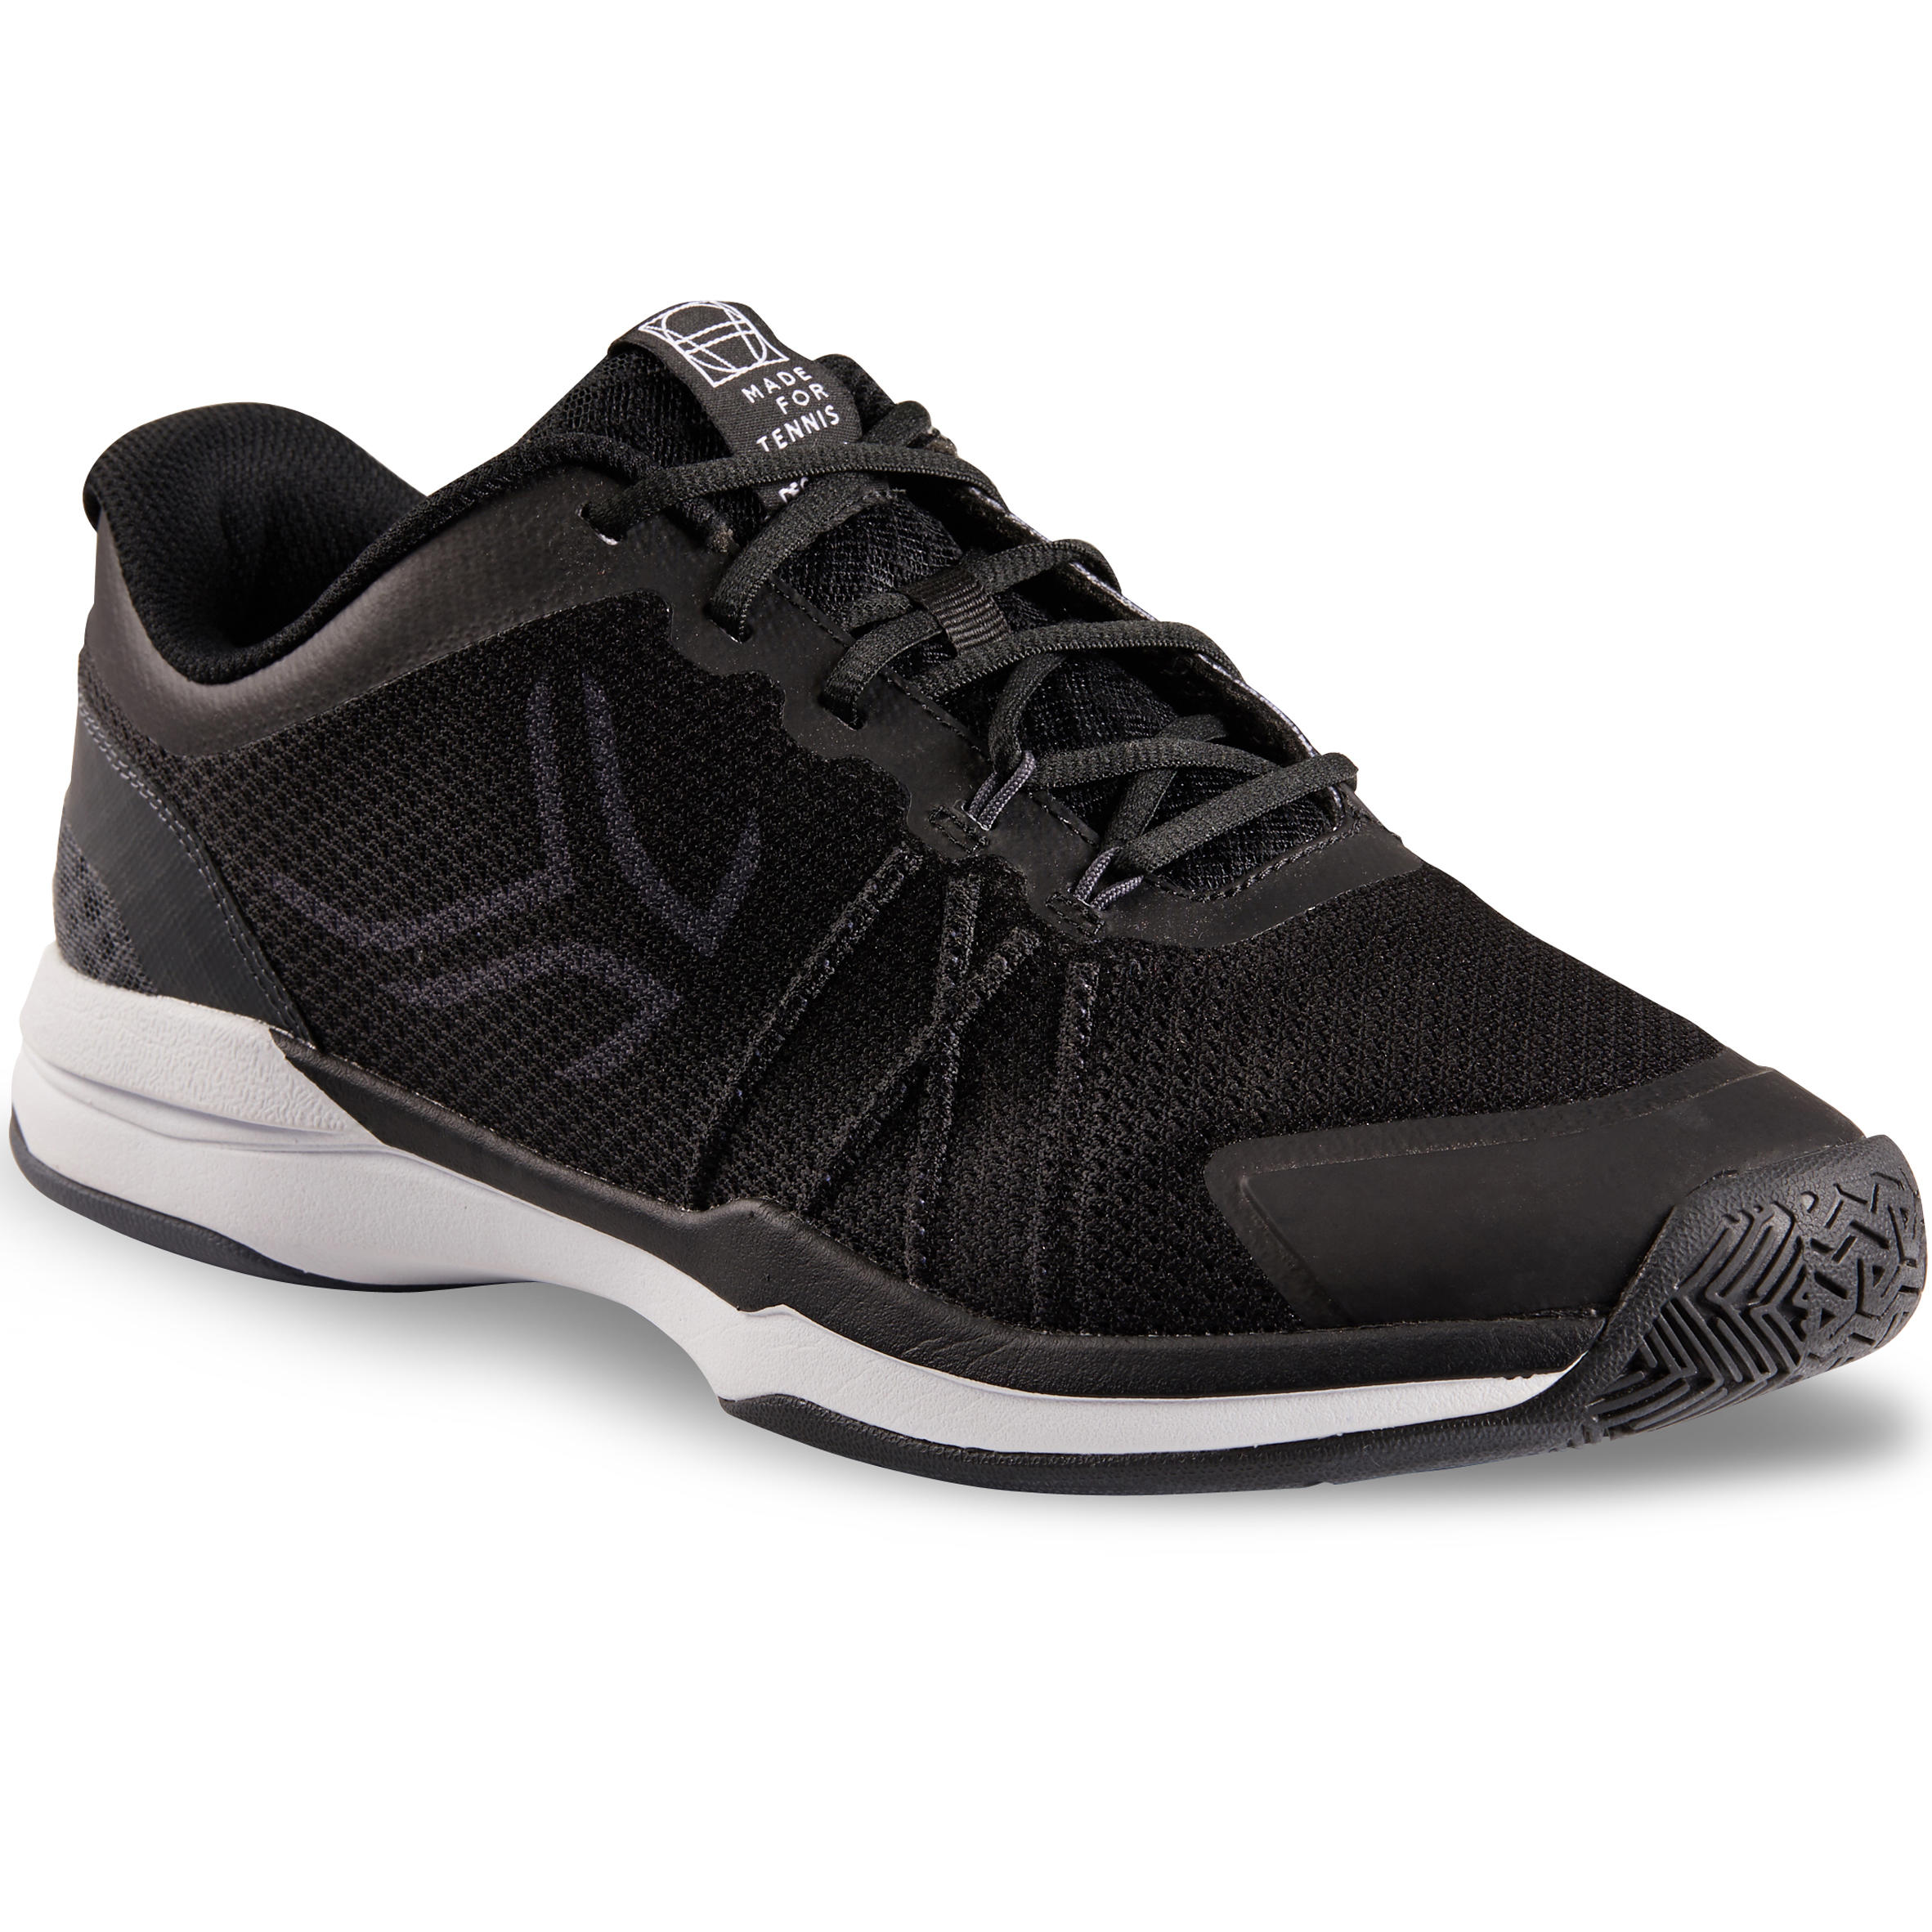 ARTENGO TS590 Multicourt Tennis Shoes - Black